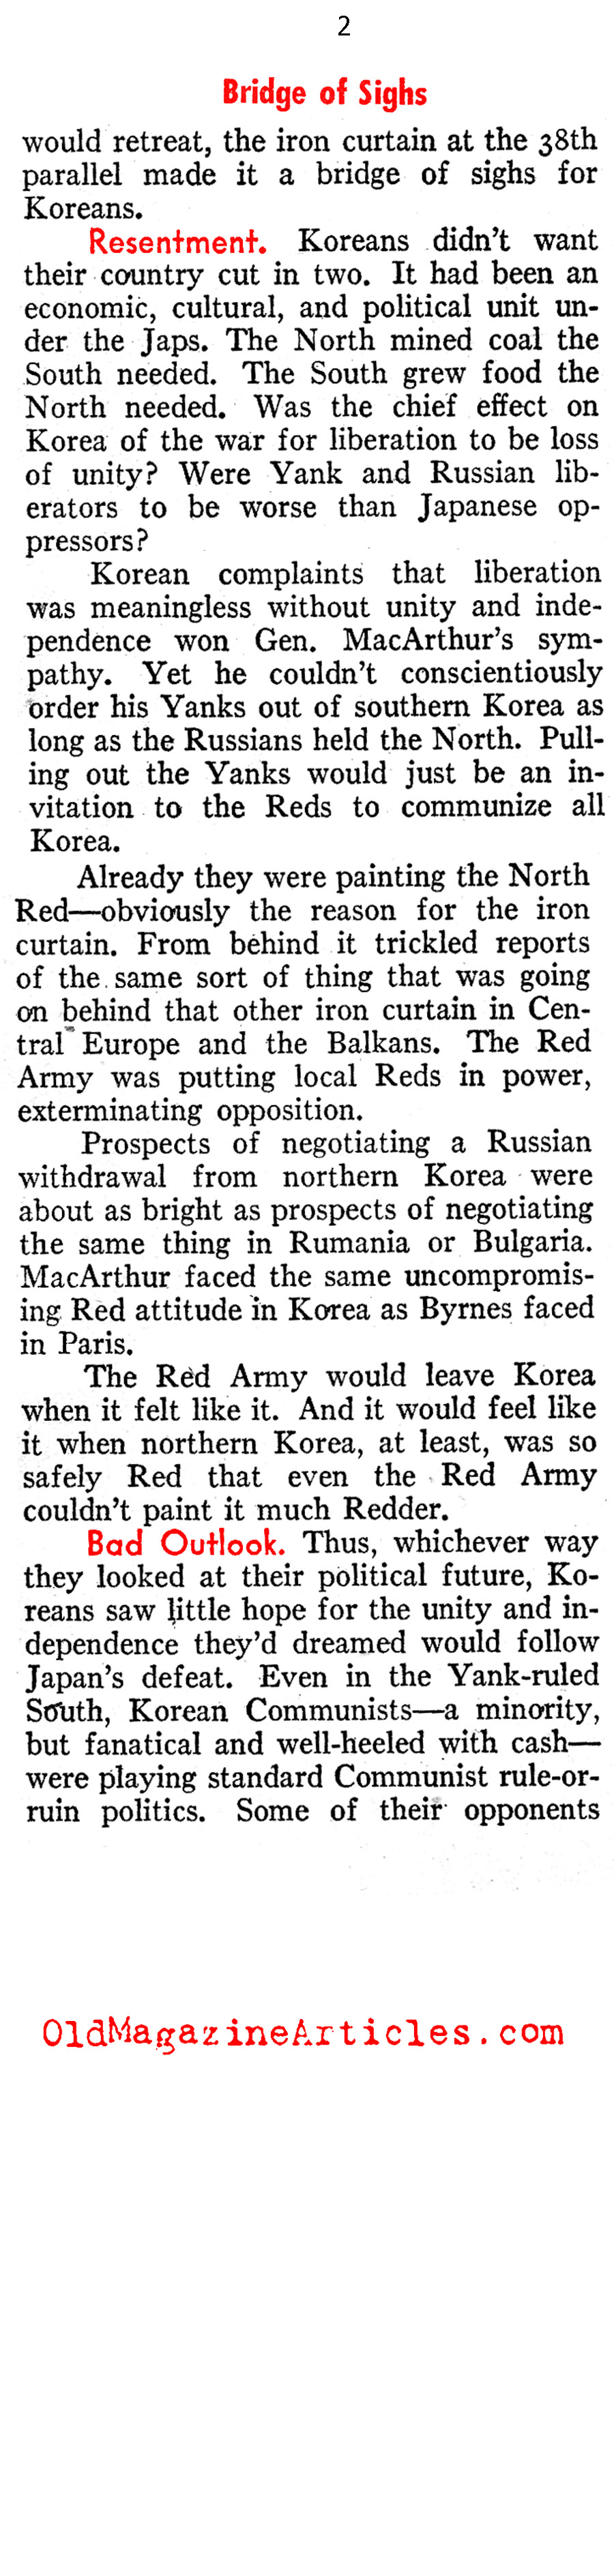 Korea: 1946 (Pathfinder Magazine, 1946)